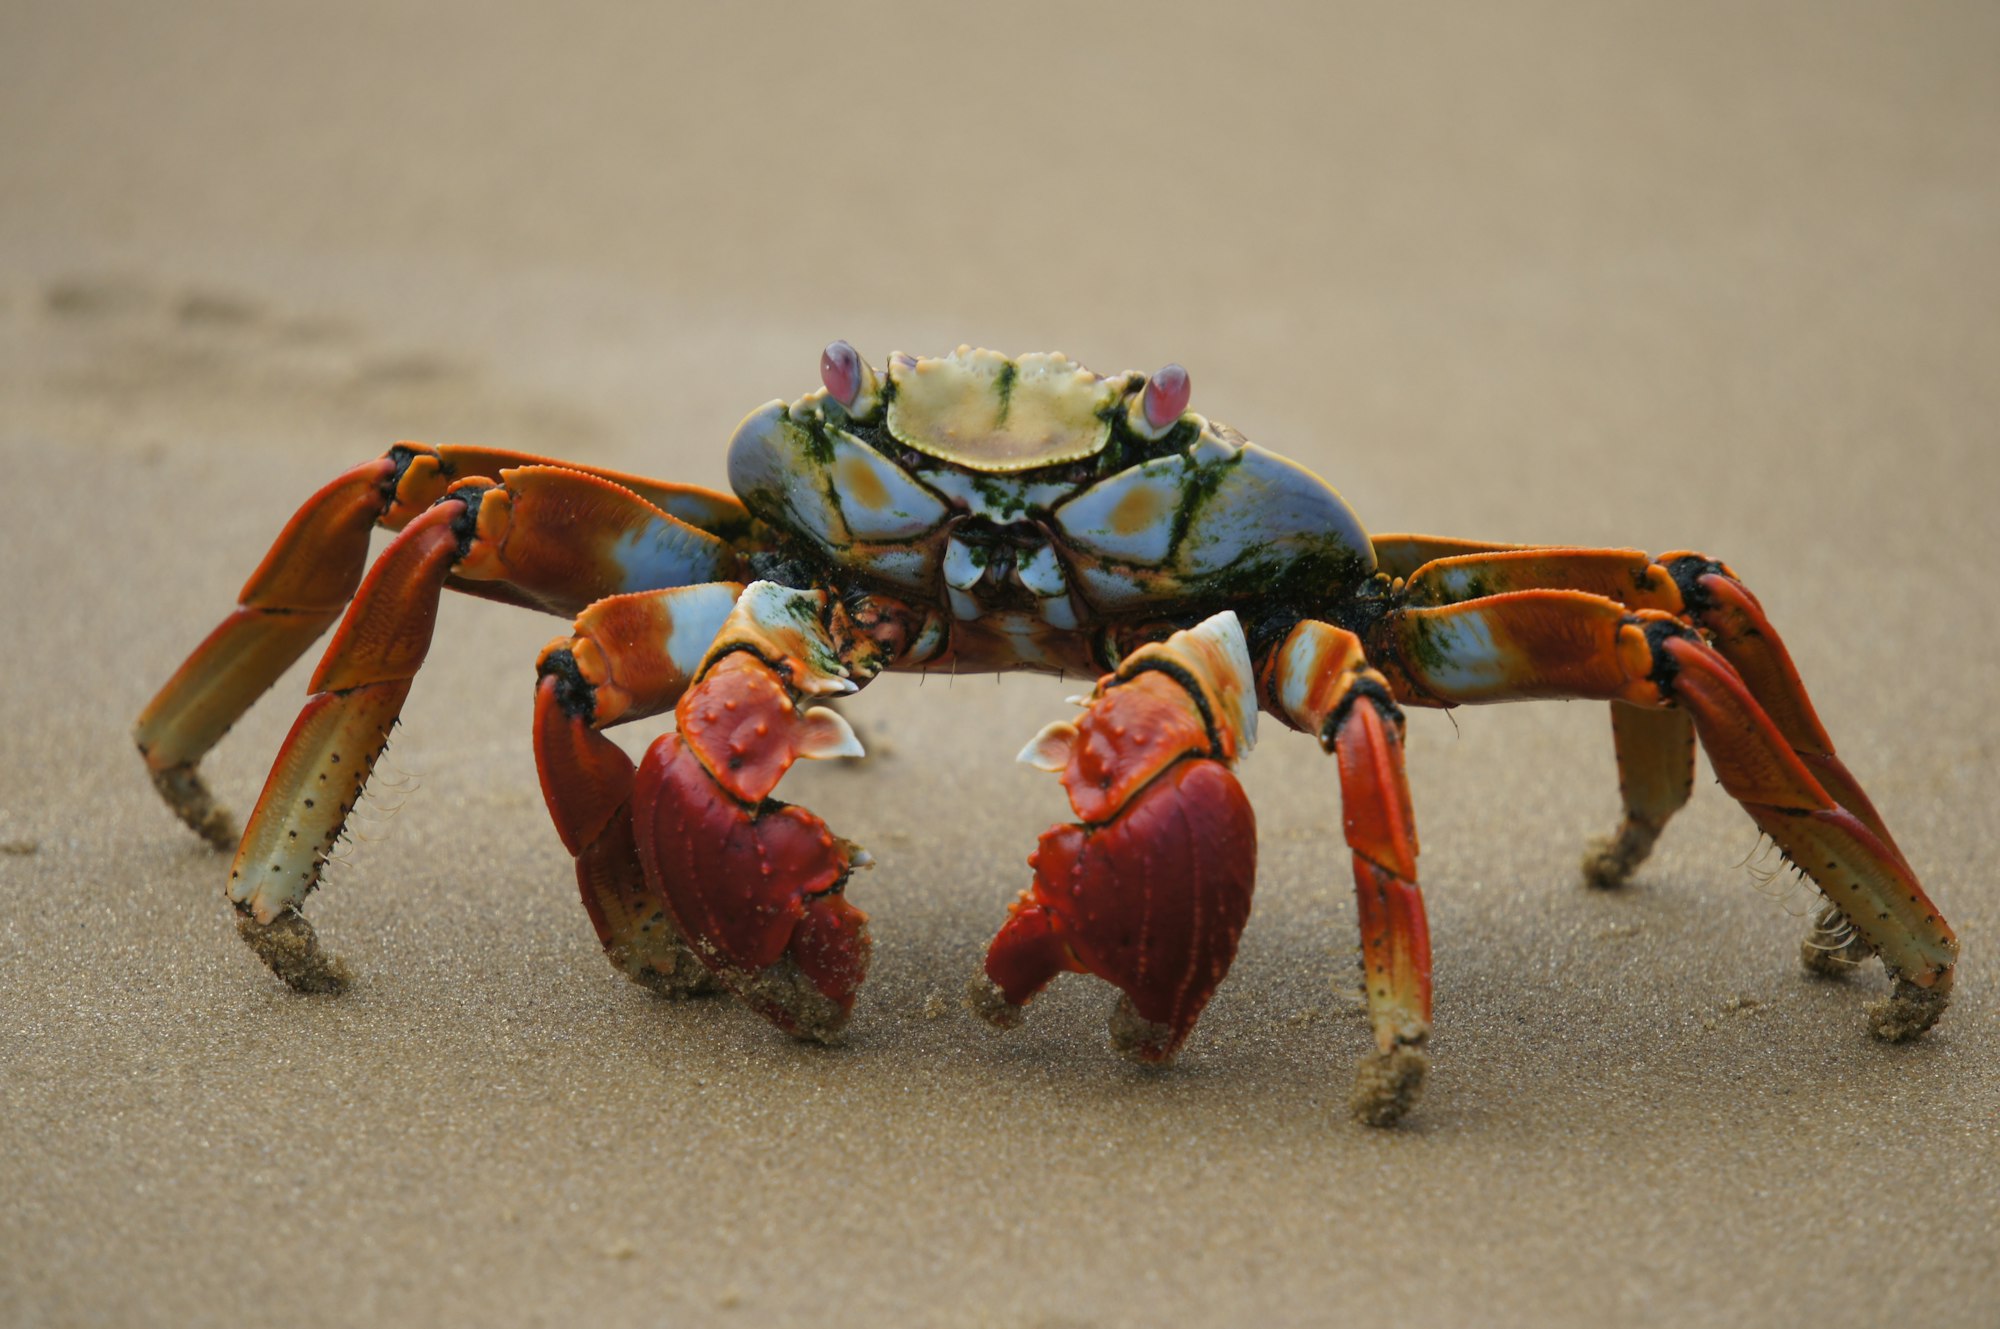 Ocean crab walking across the sand in the Galapagos Islands.
#crab #ocean #beach #galapagos.